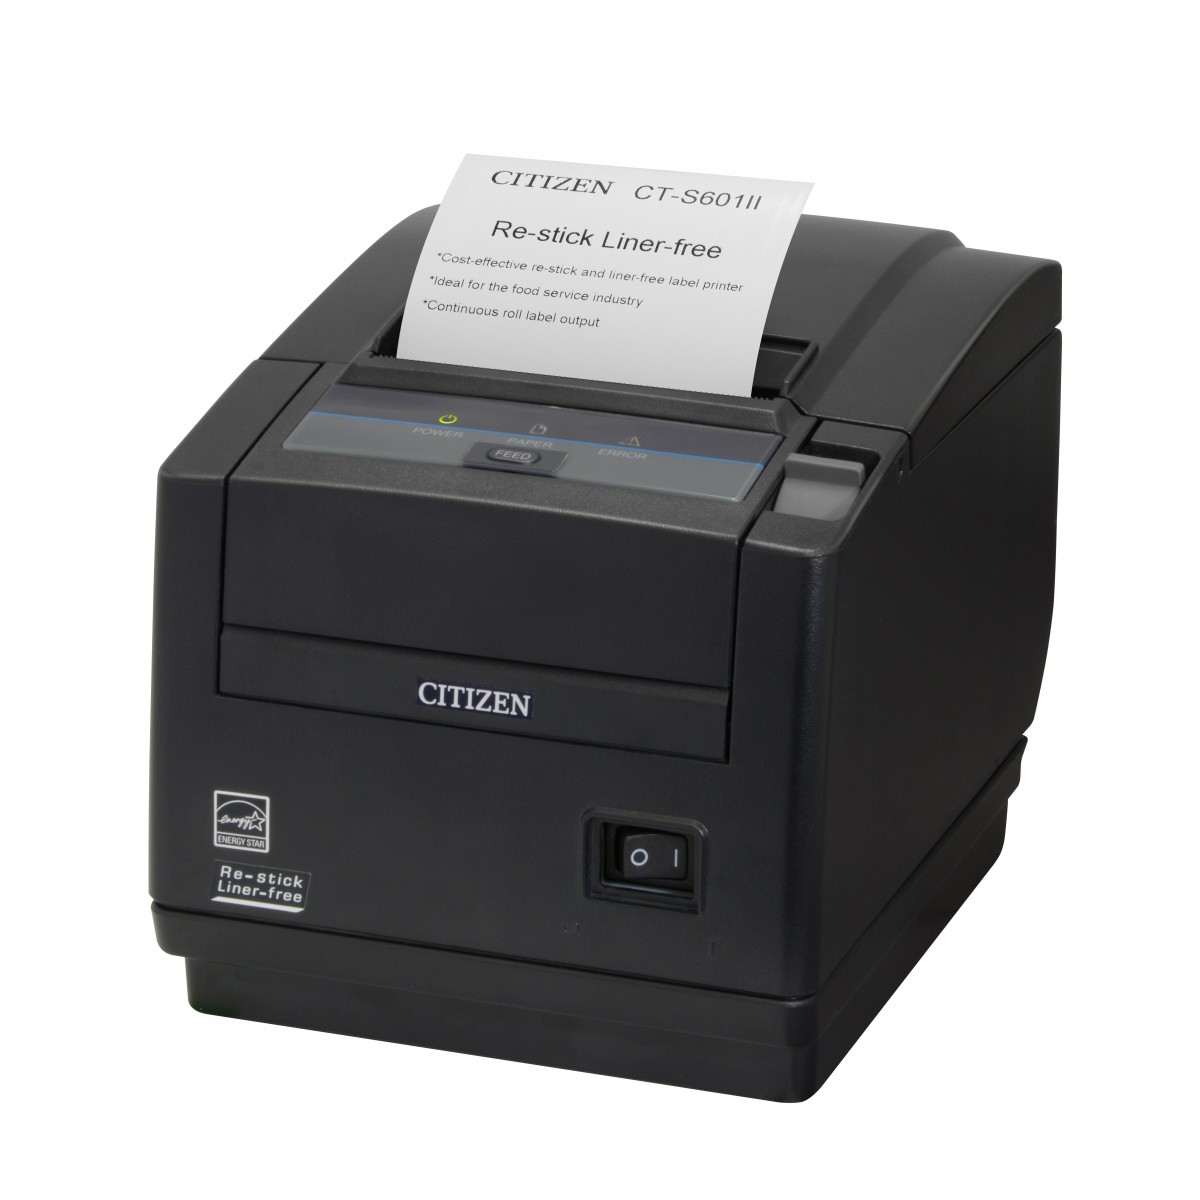 Citizen CT-S601IIR PRNT Restick/Liner - Printer - Thermal Transfer